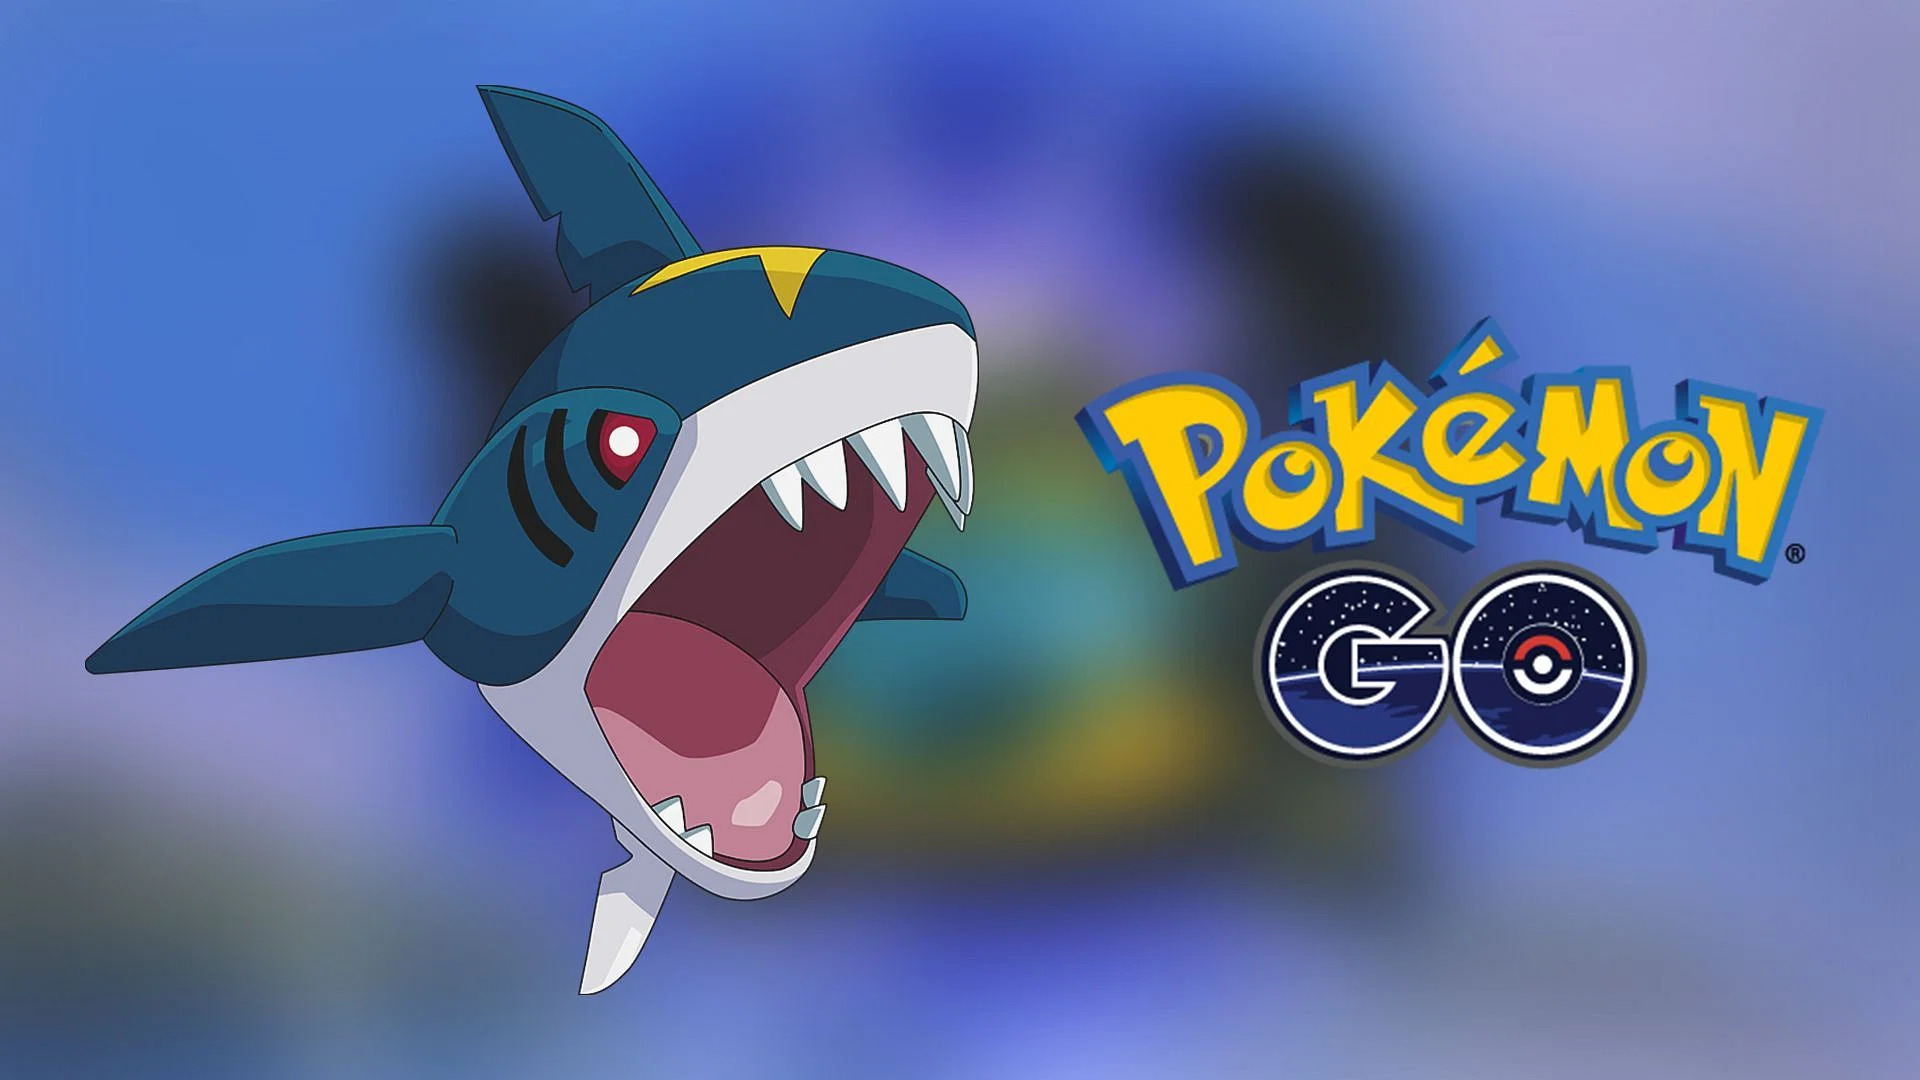 Pokémon GO Teases "Mega Heracross" Along With New Mega Pokémon's In April 2024!